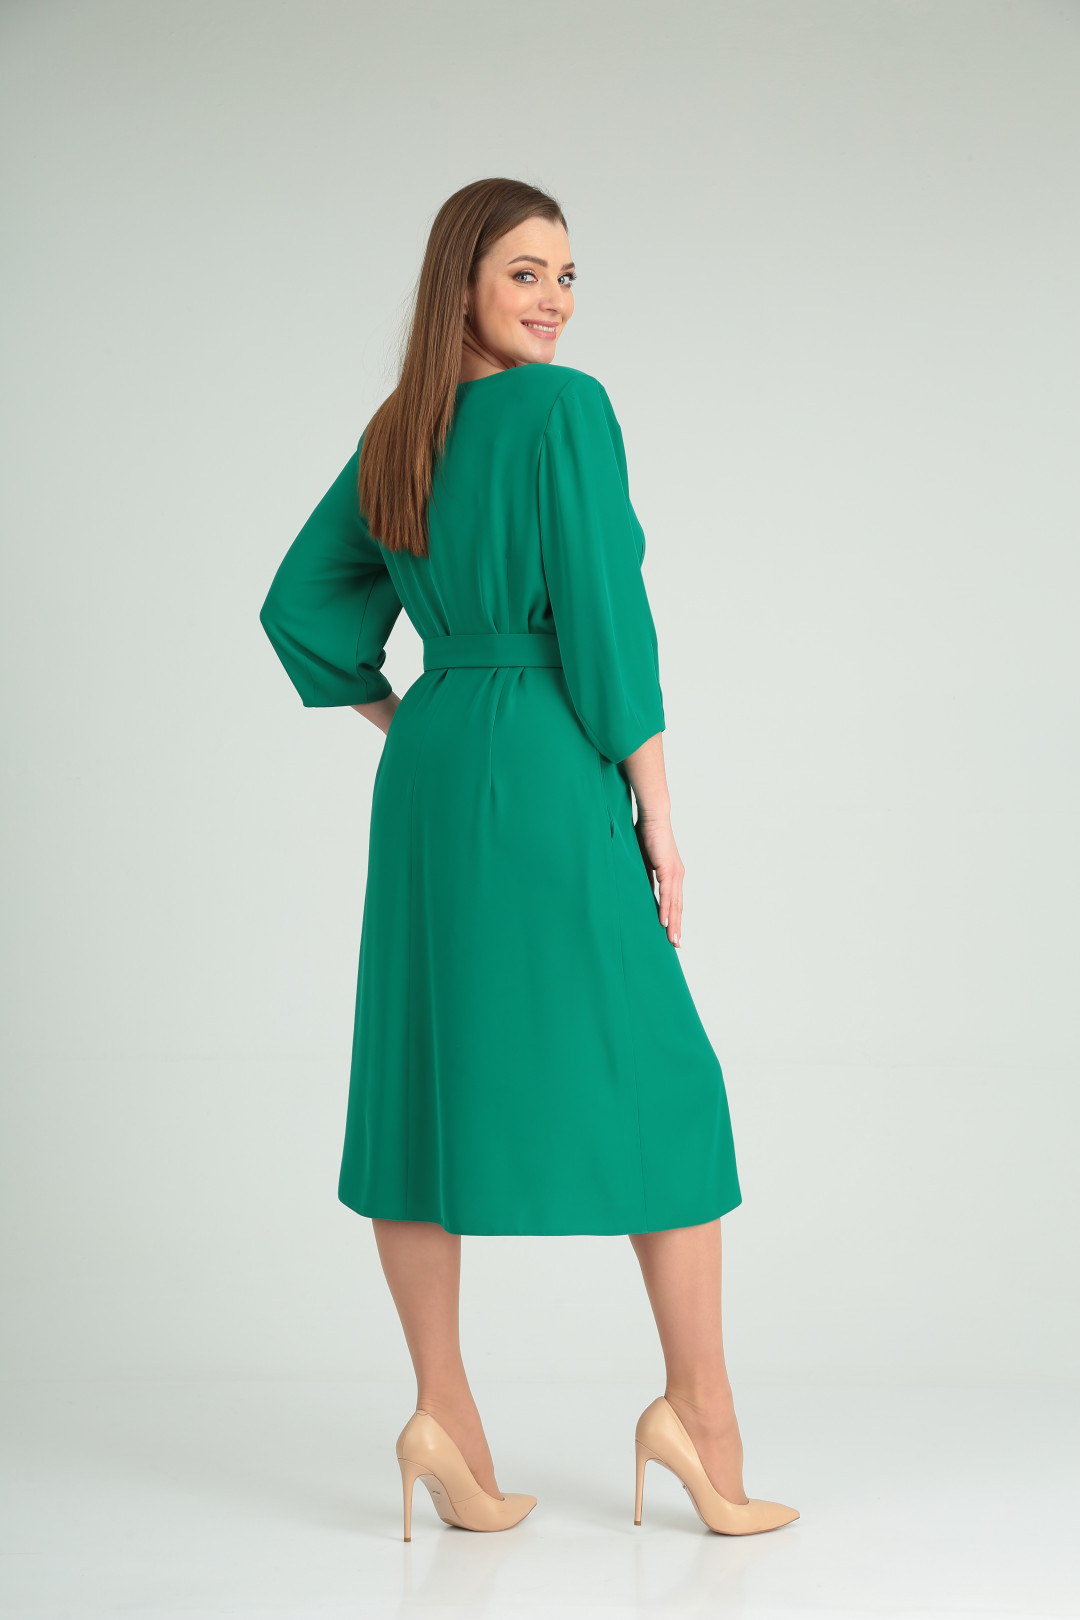 Платье TVIN 4026 зеленый